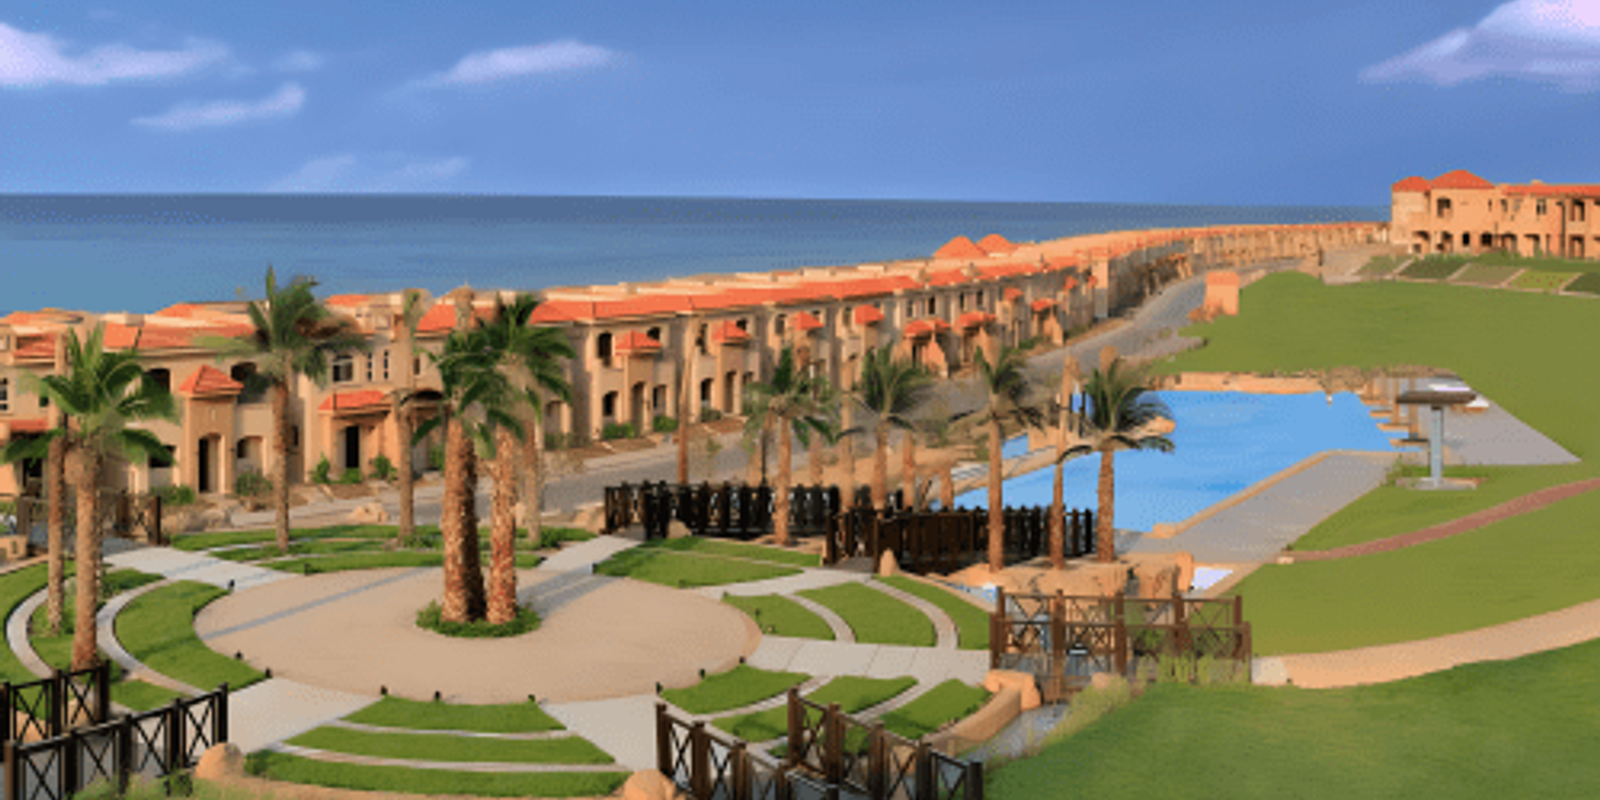 Telal Ain Sokhna by Roya For Real Estate  Company in Al Ain Al Sokhna, Suez - Hero Image